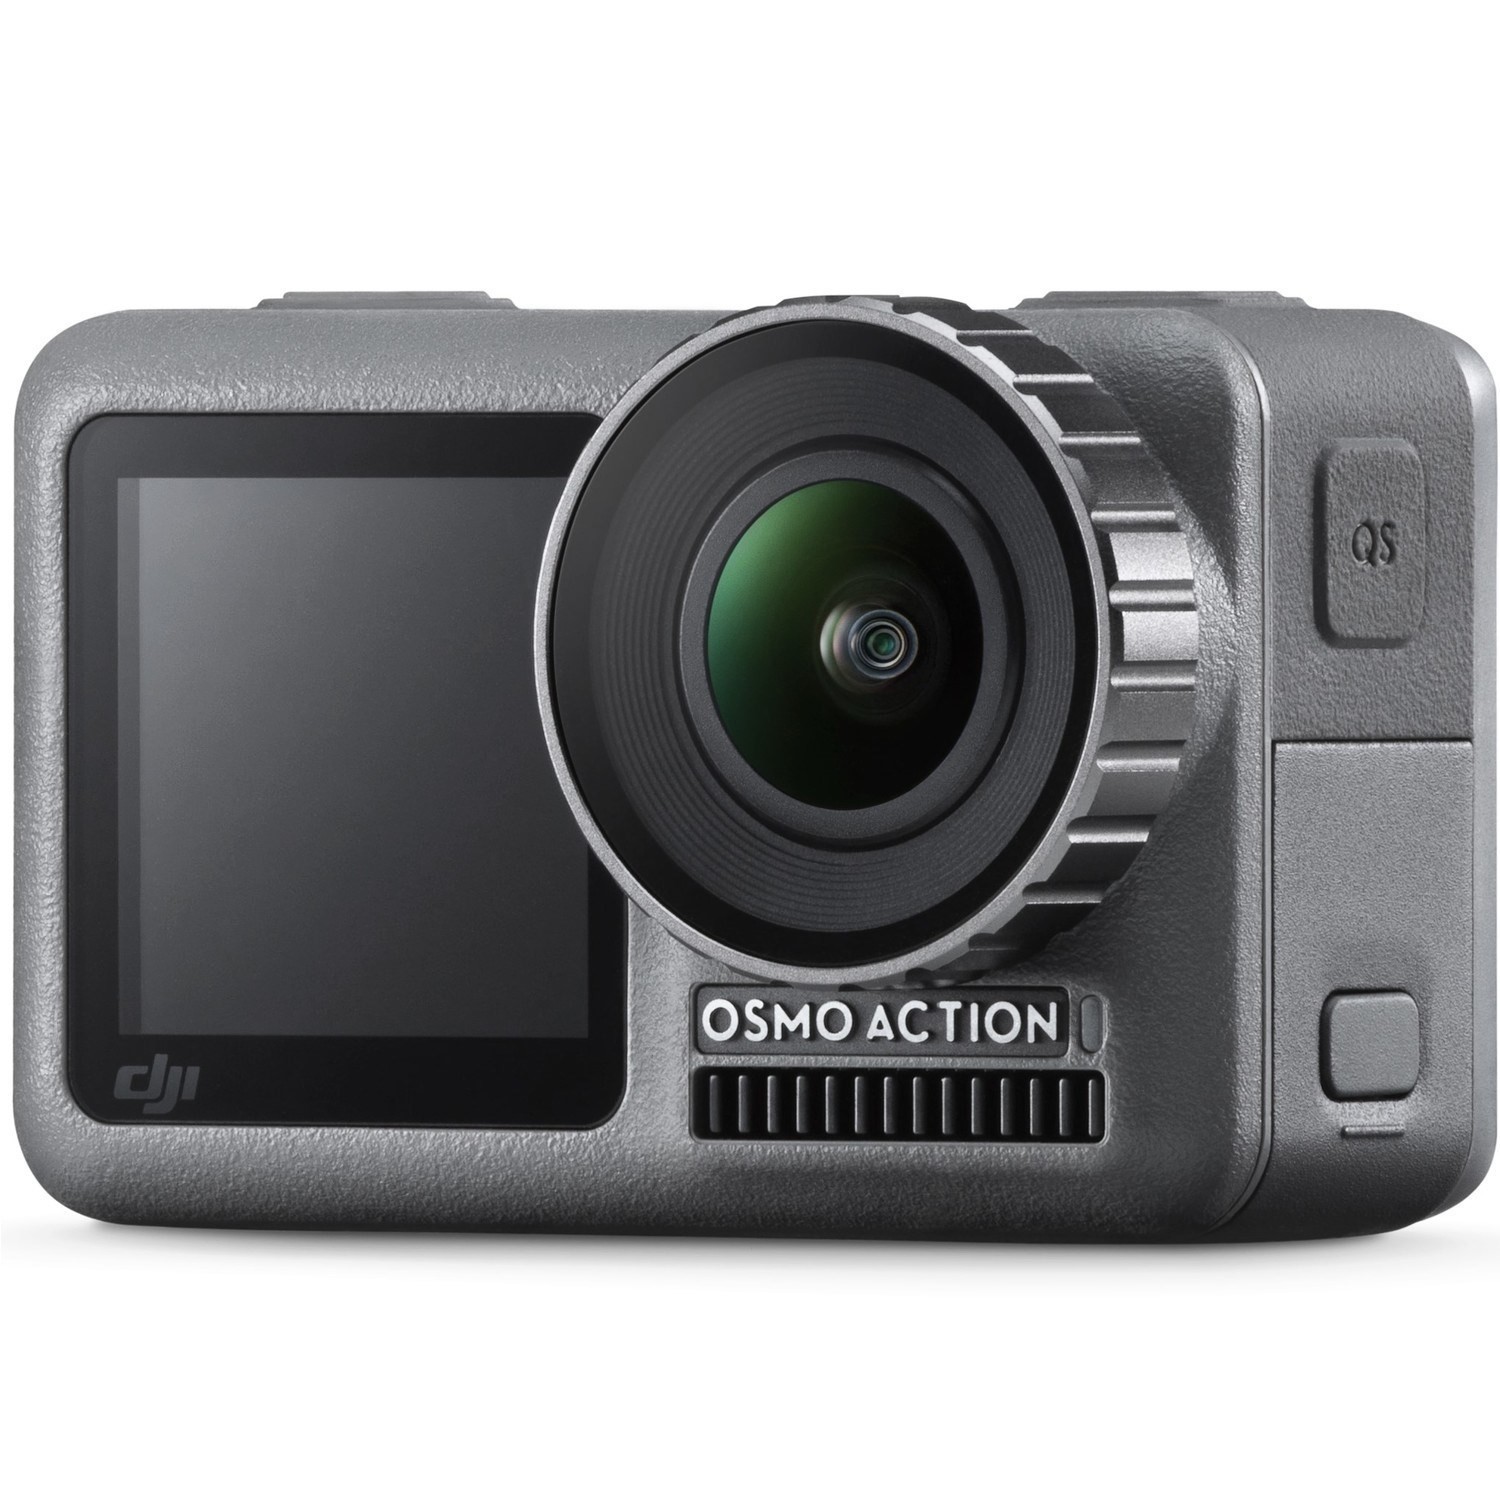 Digital camera - Osmo Action